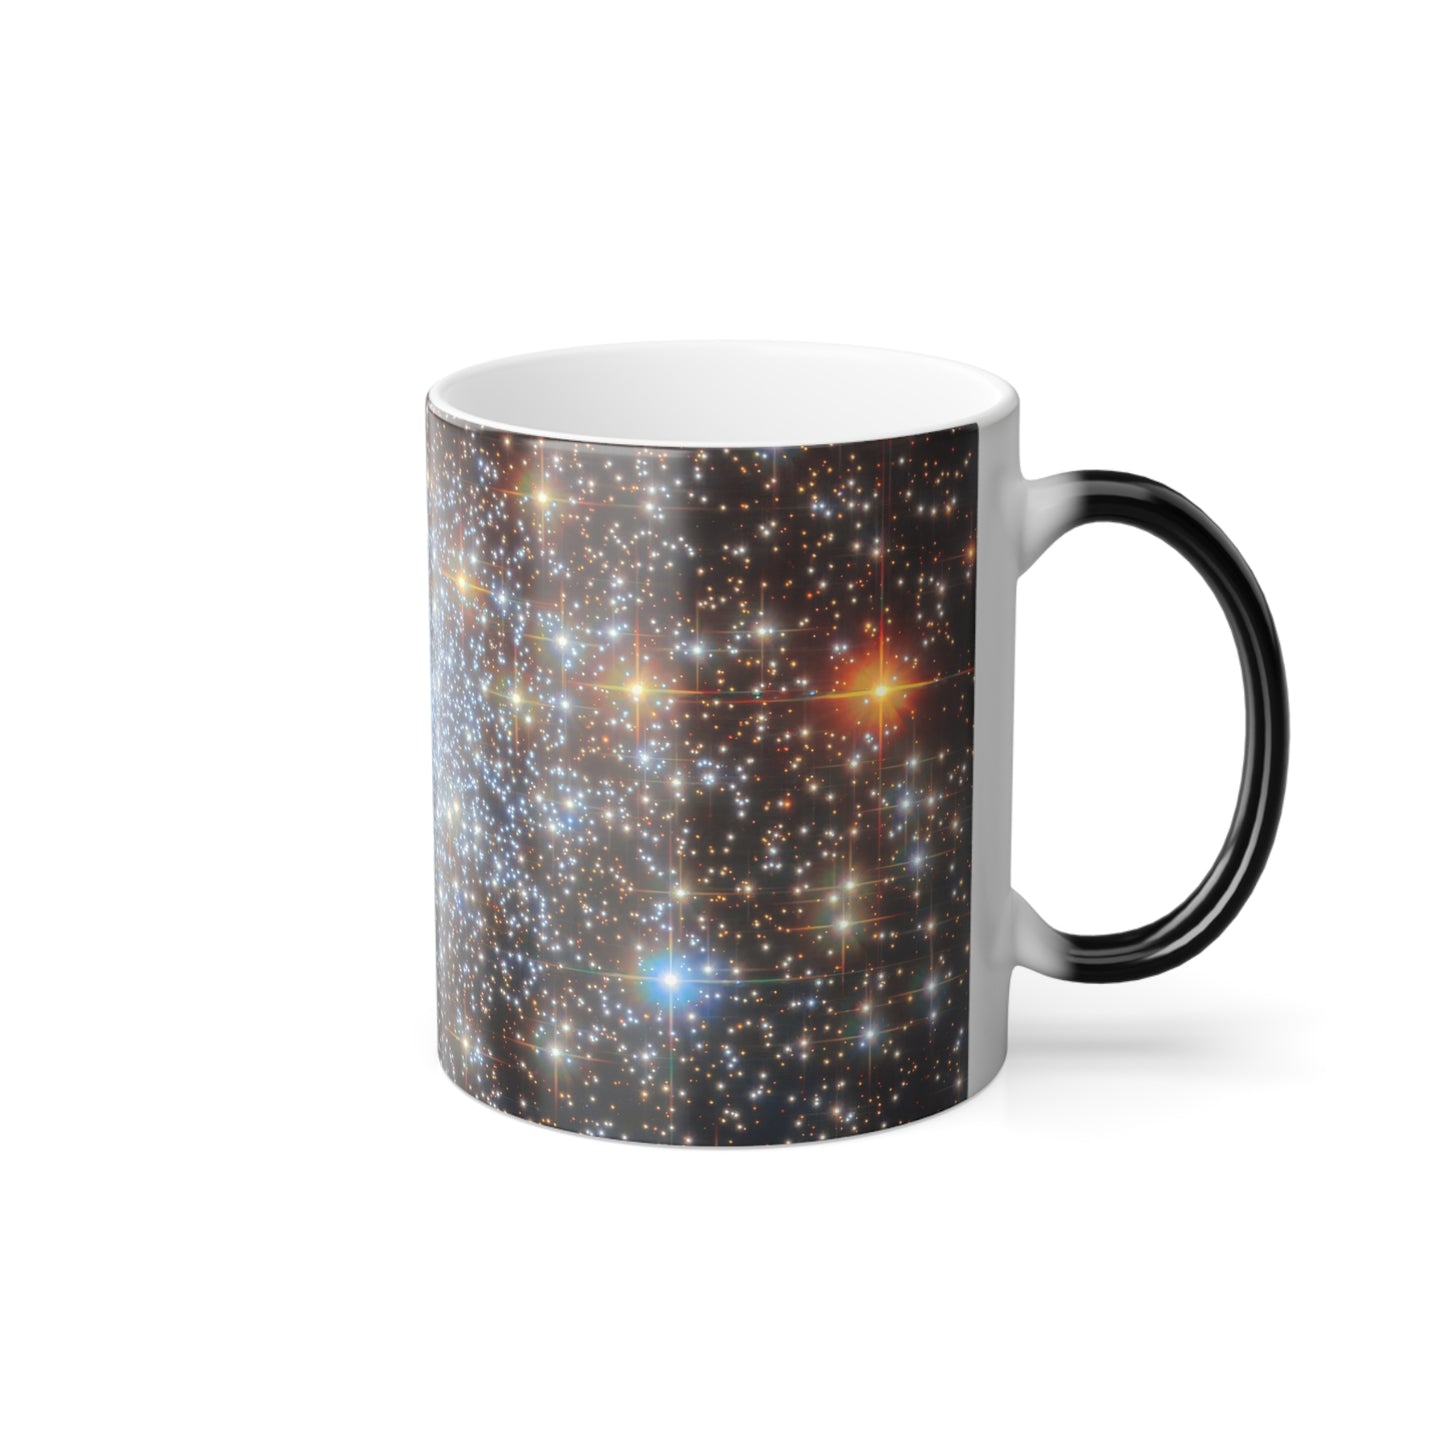 Magical Mug: Cosmos 4 Reveals the Universe with Heat, 11oz